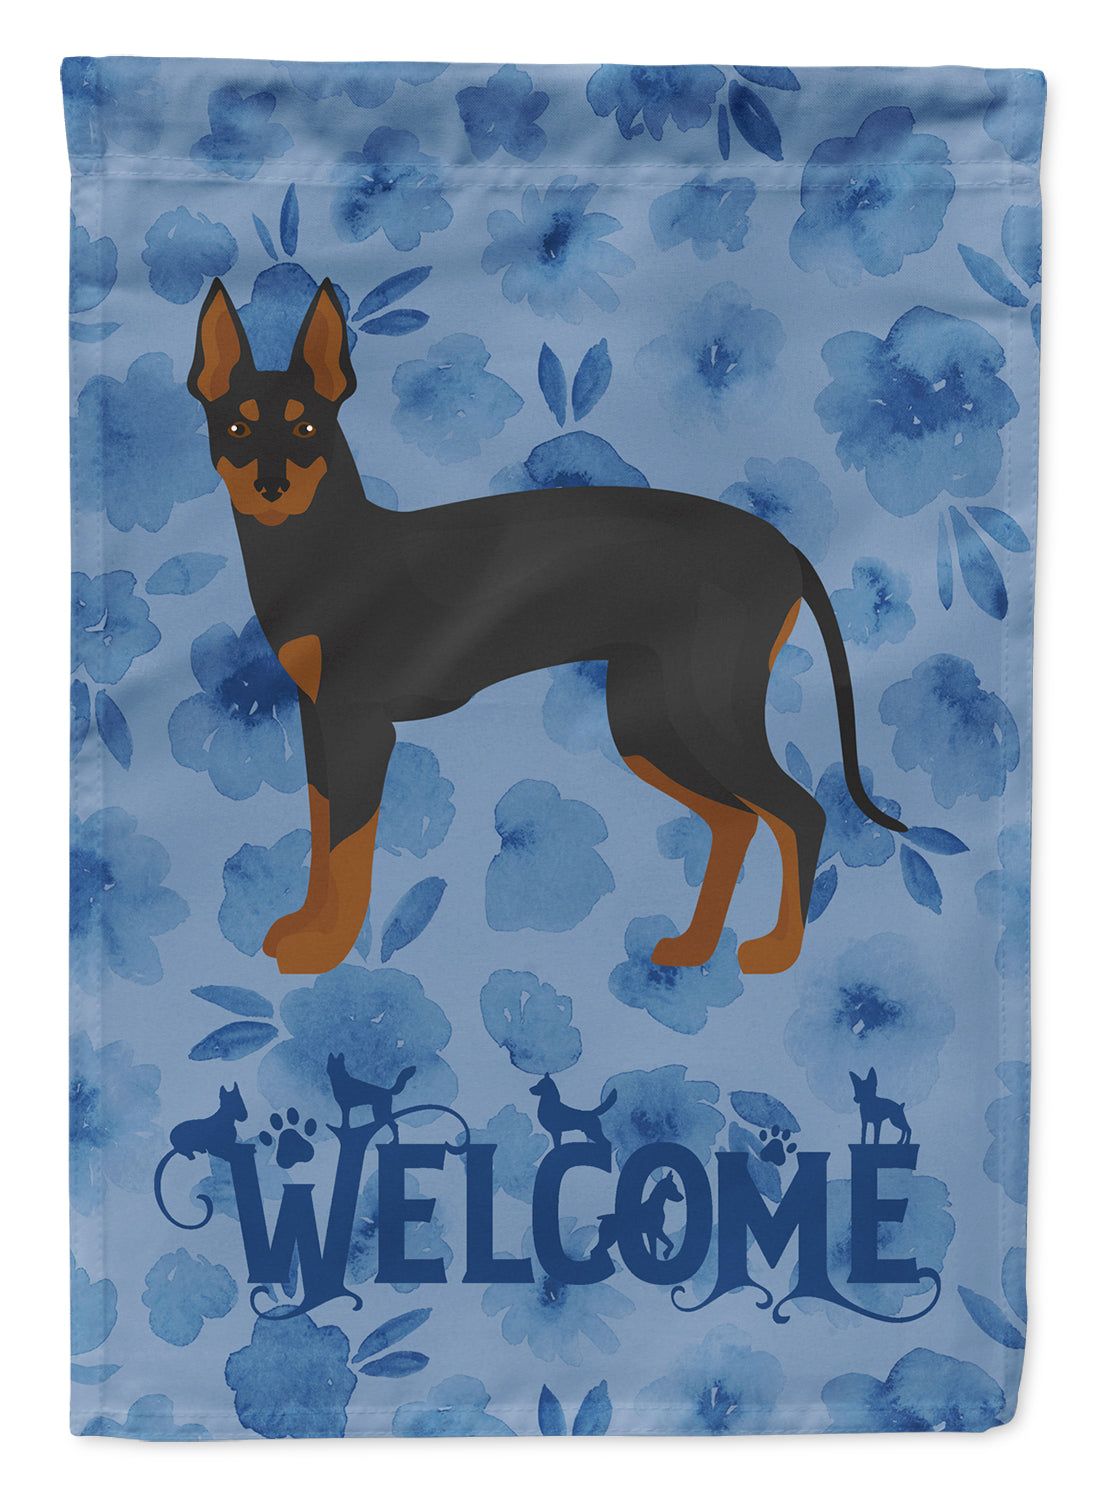 English Toy Terrier #2 Welcome Flag Garden Size CK5989GF